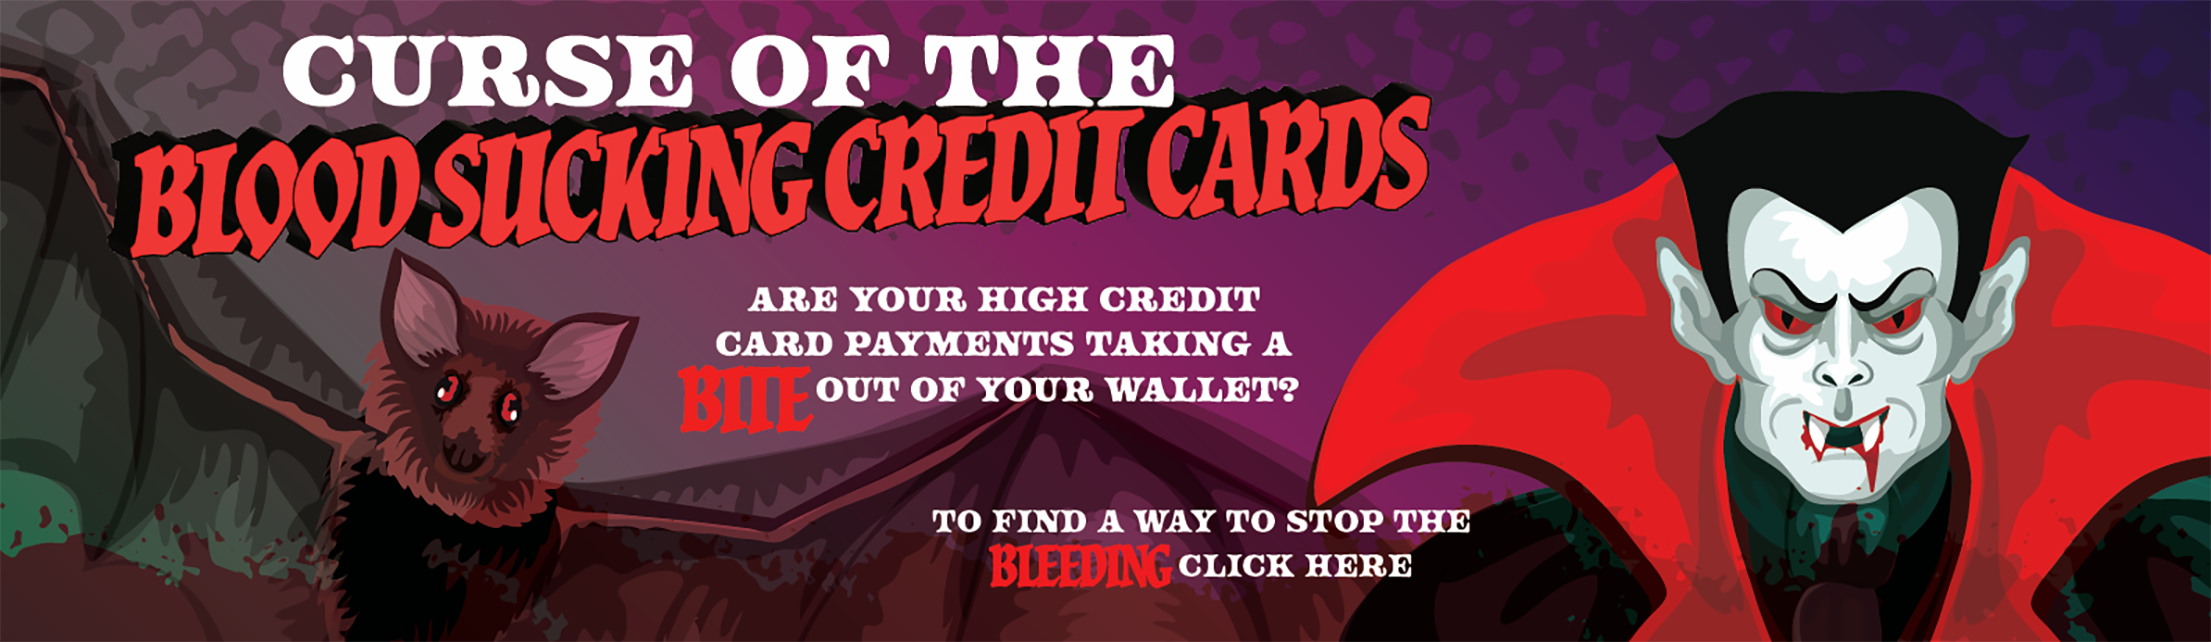 Blood Sucking Credit Cards web